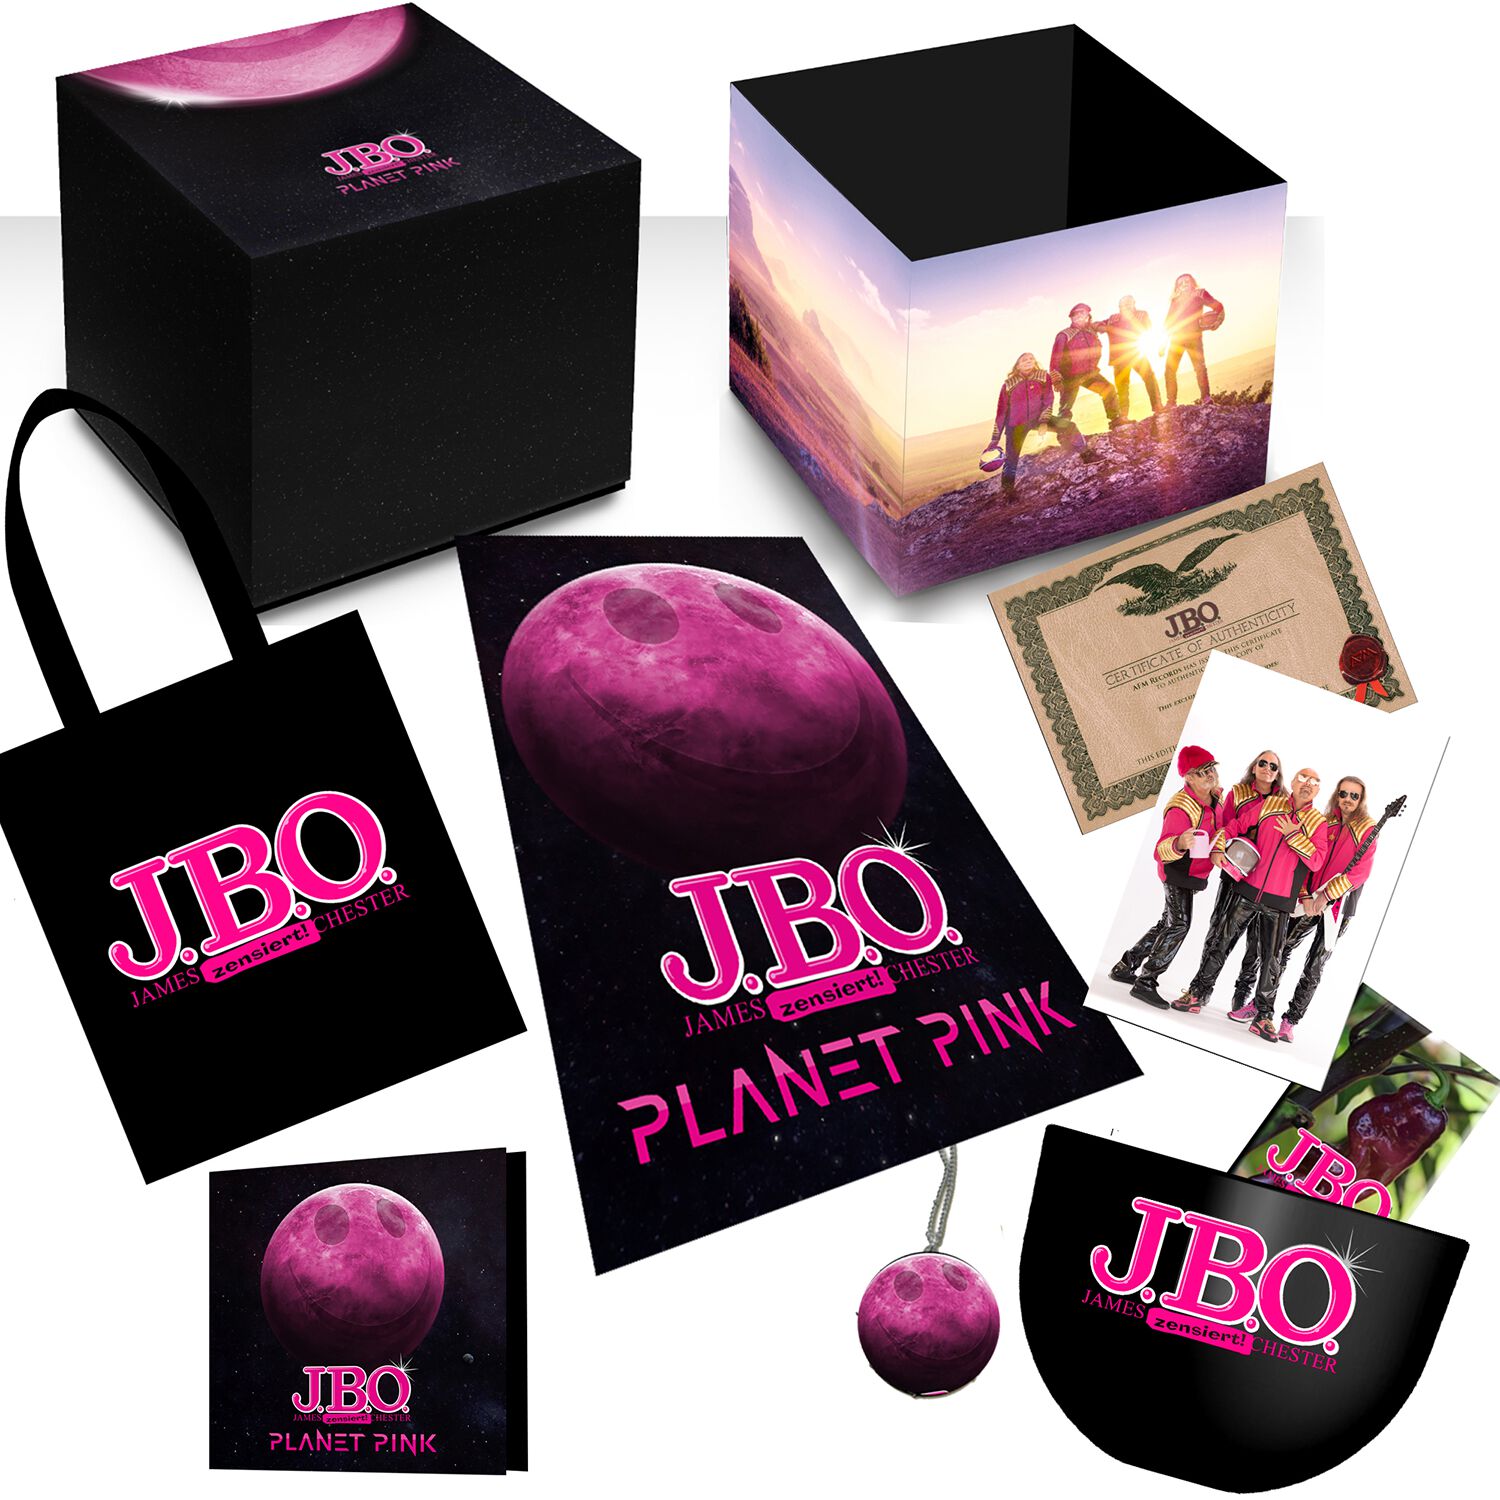 J.B.O. Planet Pink CD multicolor